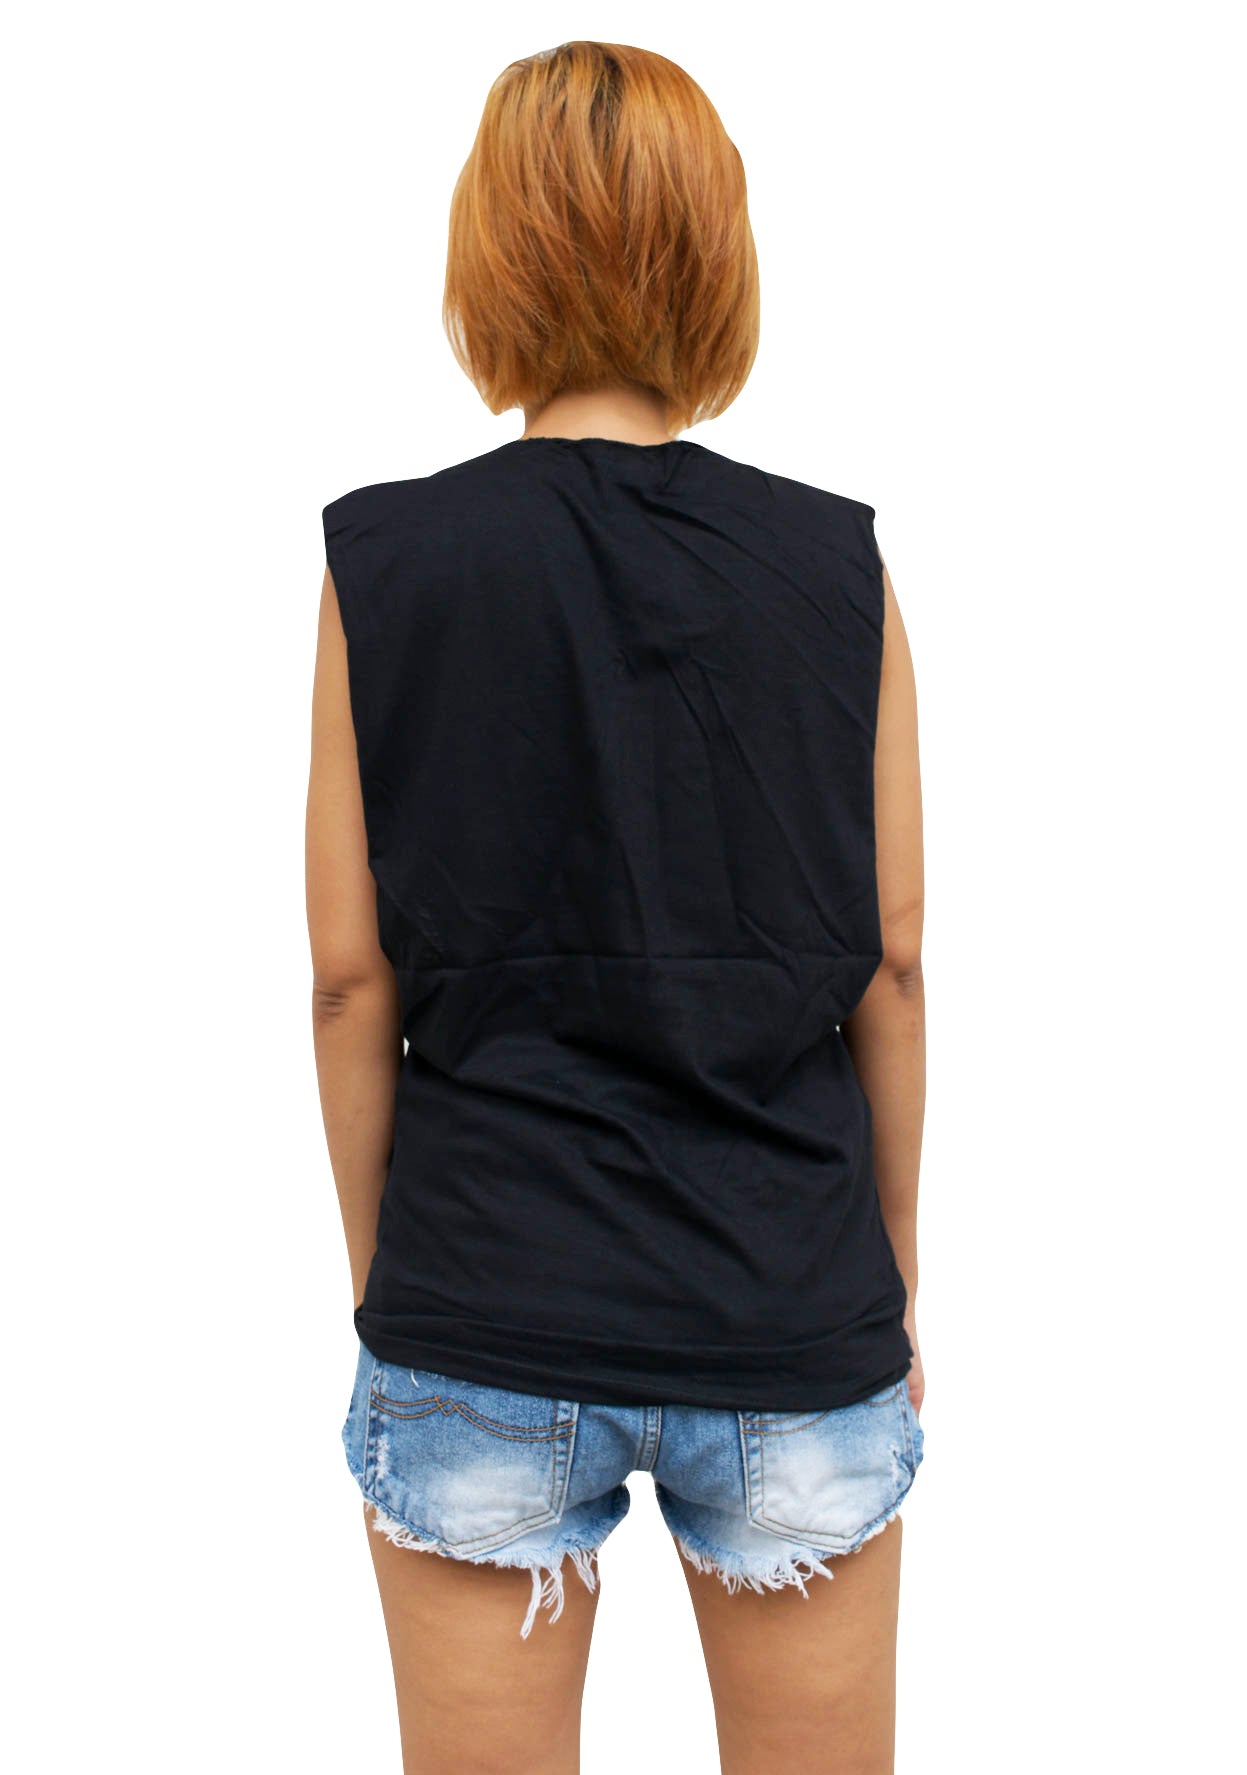 Ladies Soundgarden Vest Tank-Top Singlet Sleeveless T-Shirt